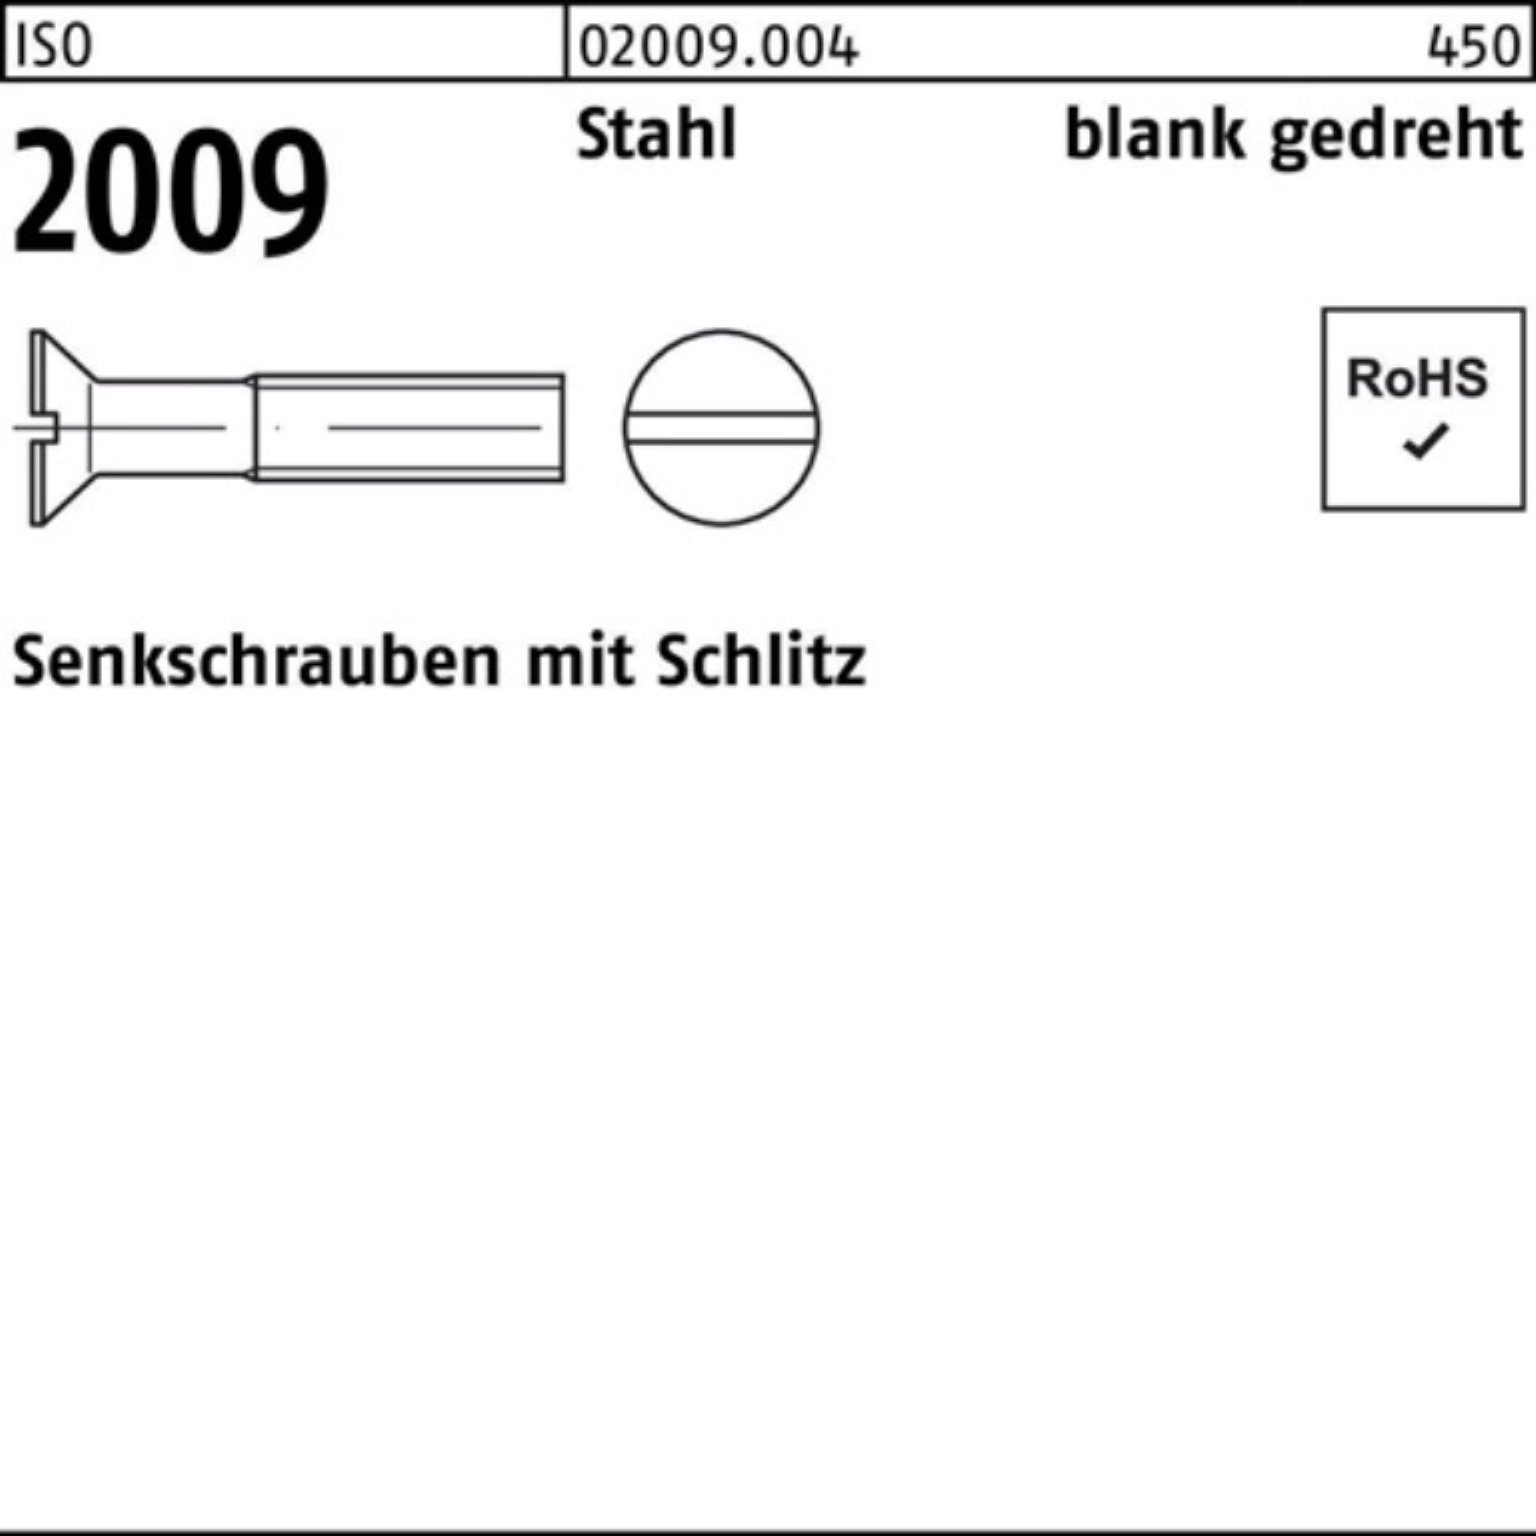 Schlitz gedreht 5 Senkschraube Pack 2009 100er Senkschraube Reyher 1 M1,4x ISO blank Stahl